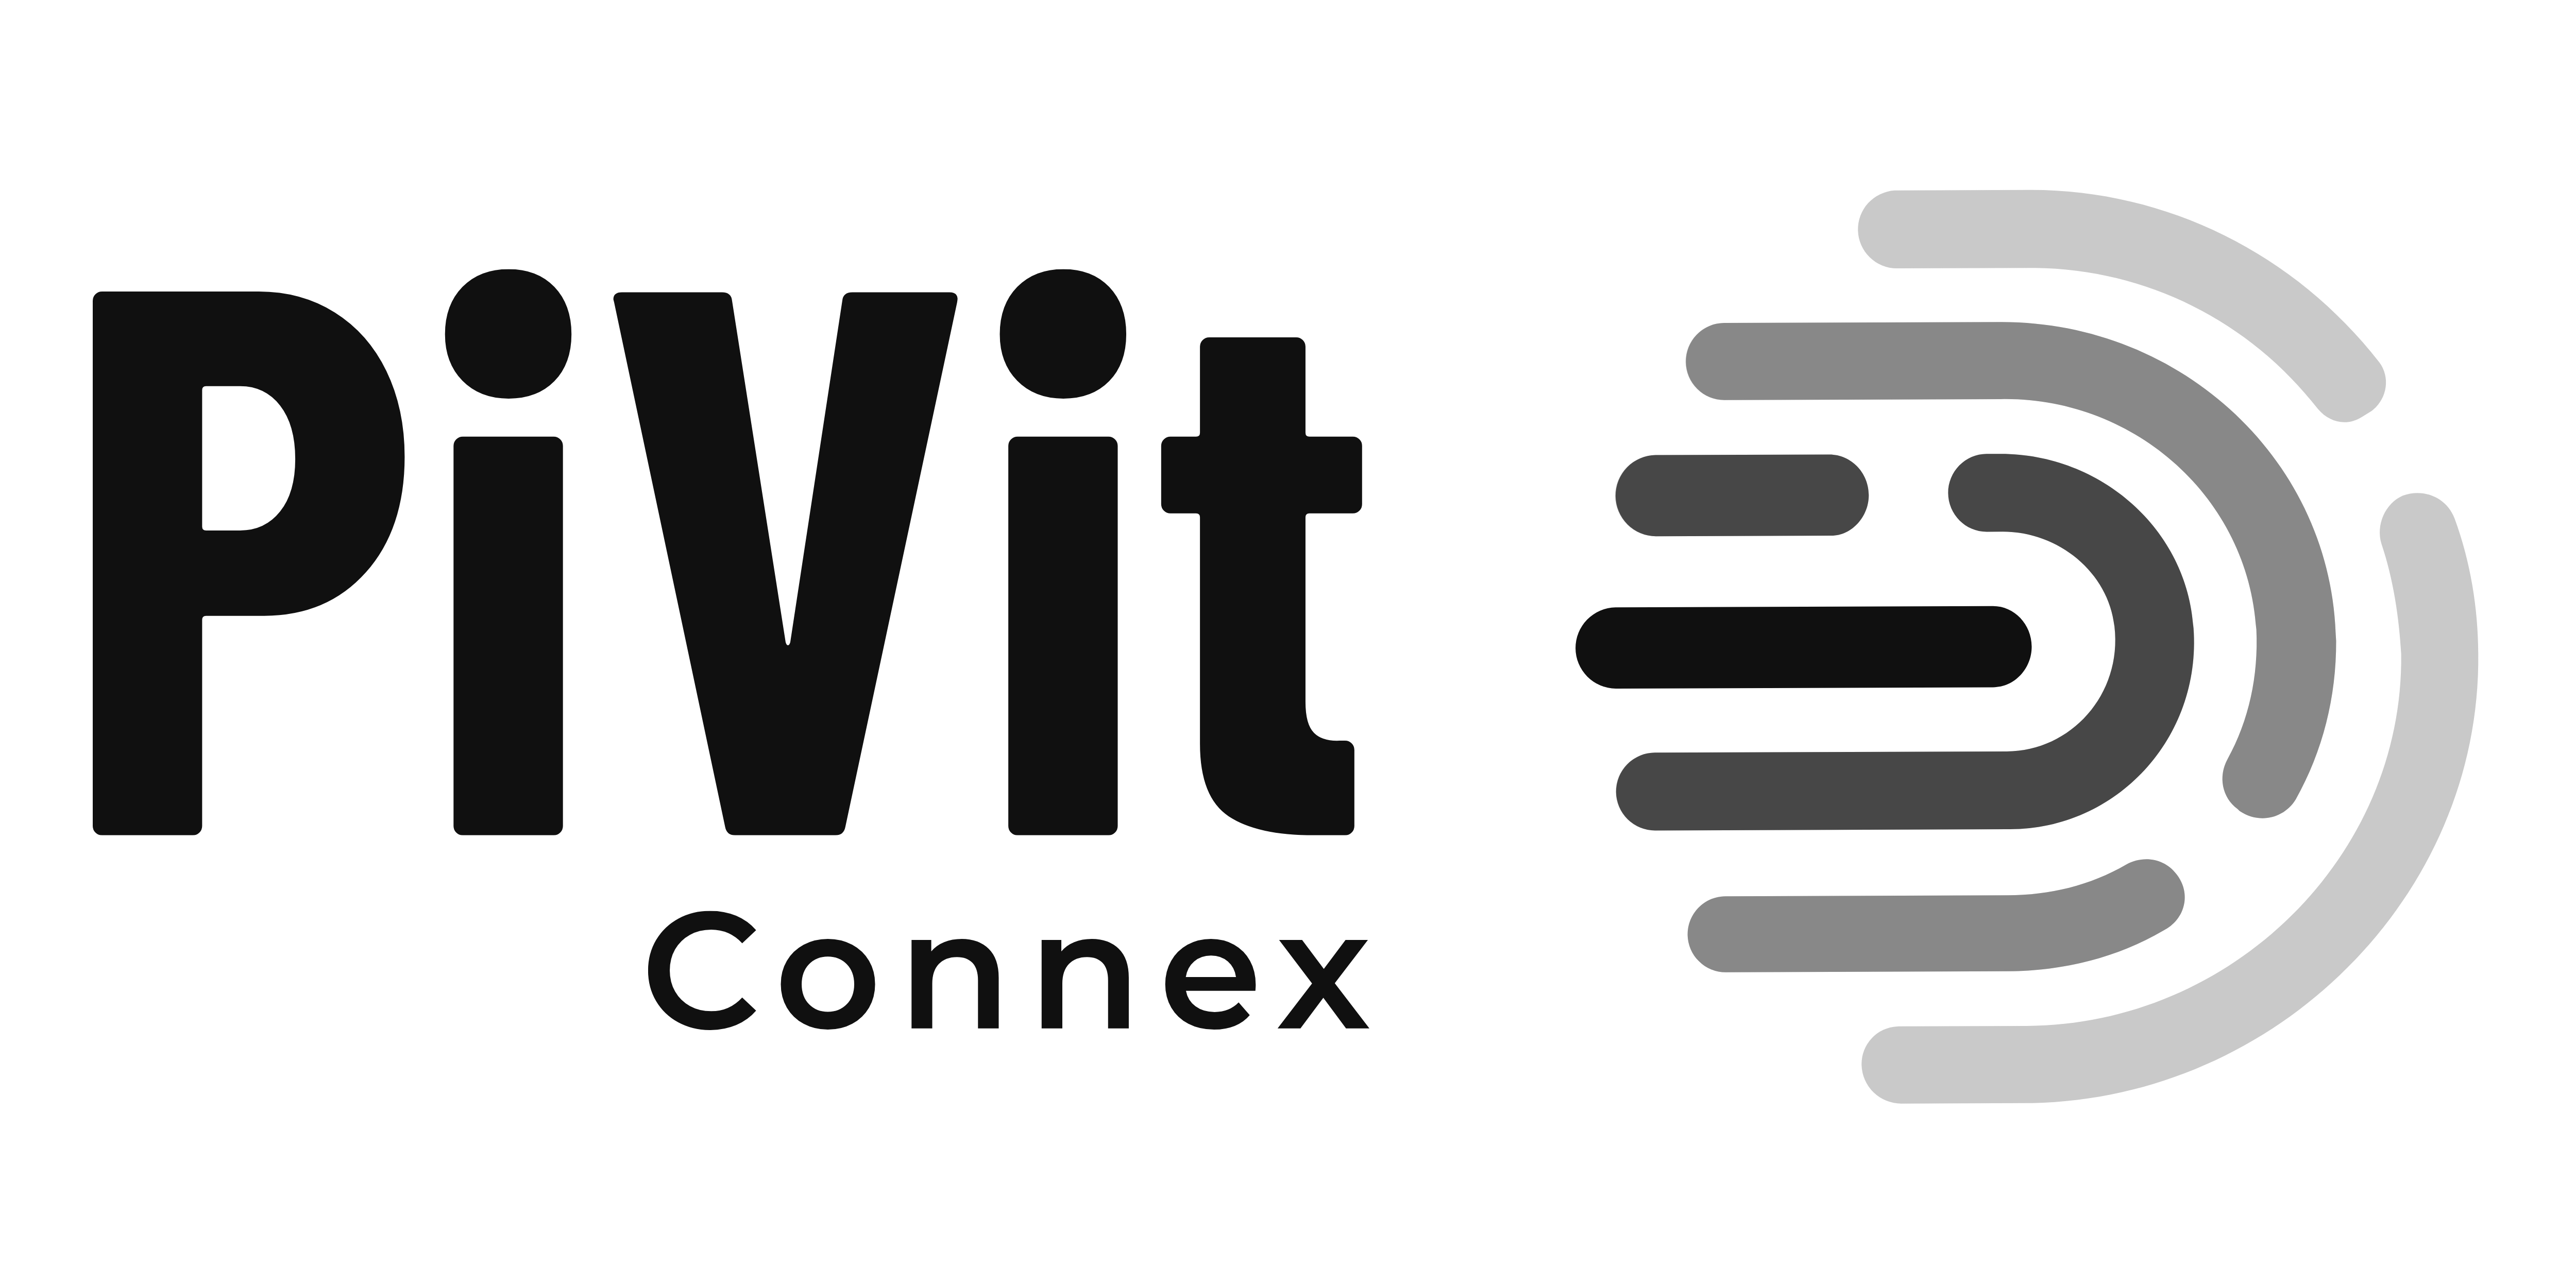 PivitConnex